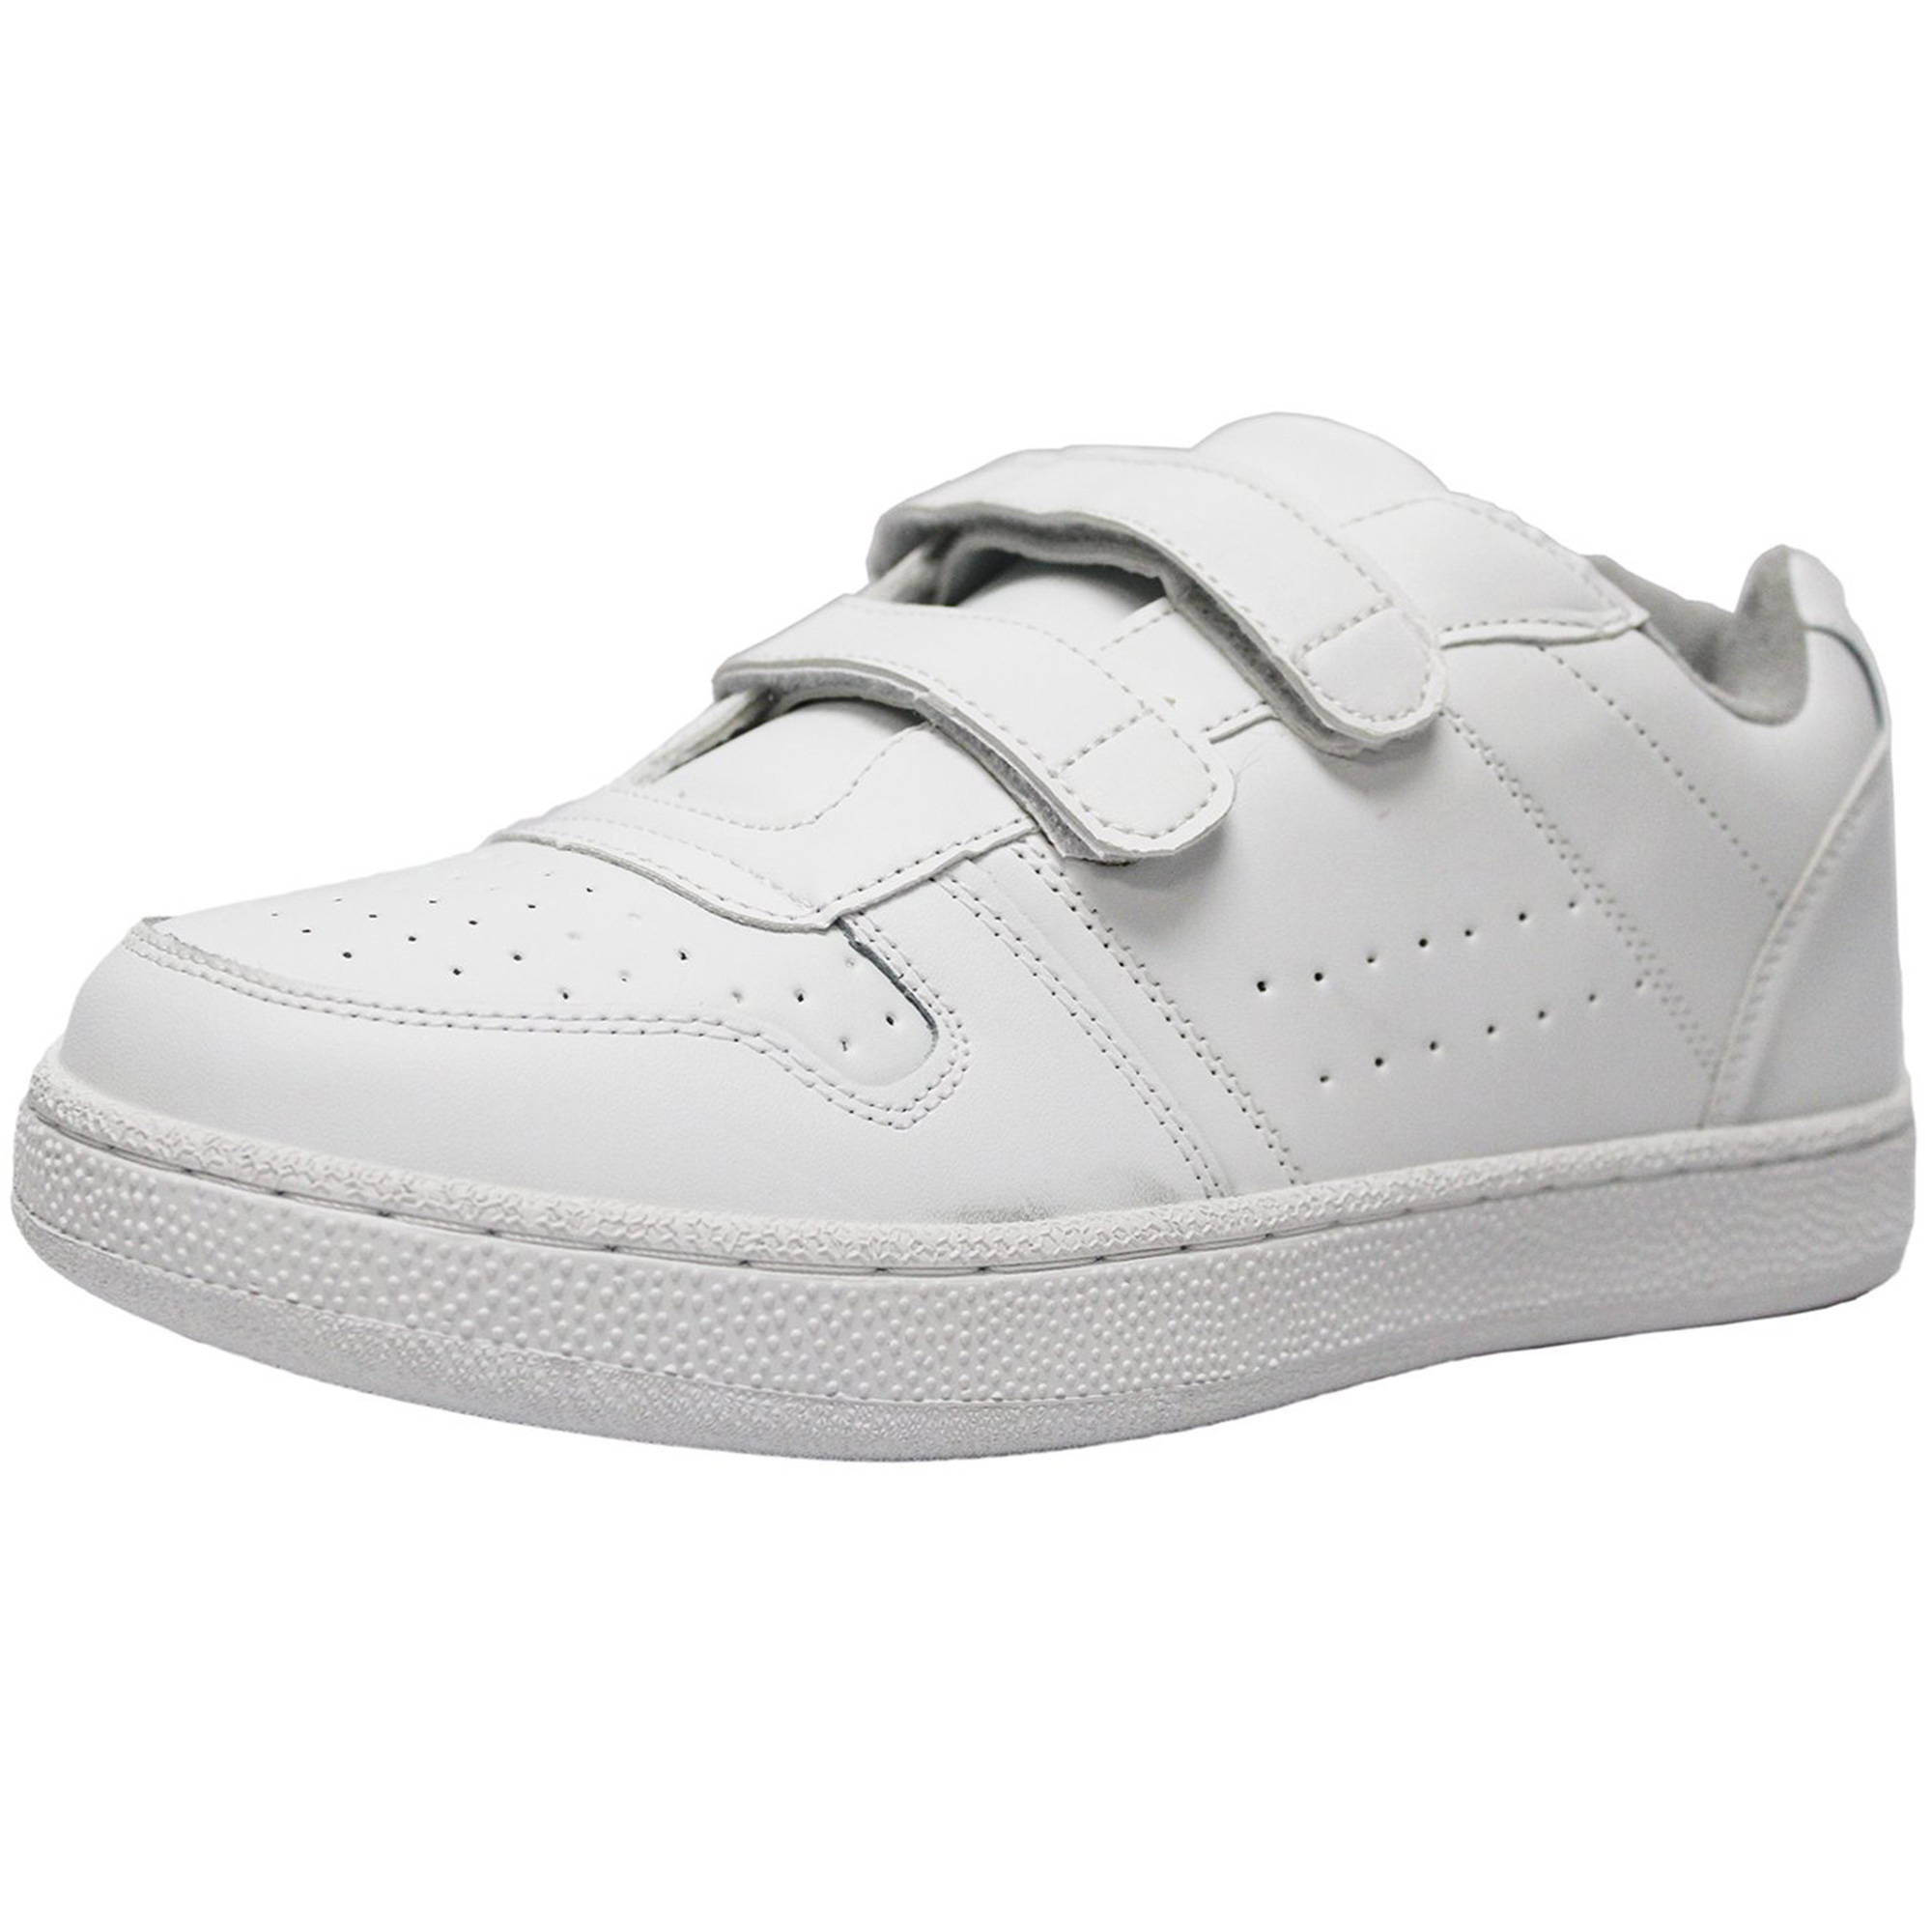 Tanleewa Men's Leather Strap Sneakers Lightweight Hook and Loop Walking Shoe Size 5.5 Adult Male - image 1 of 5